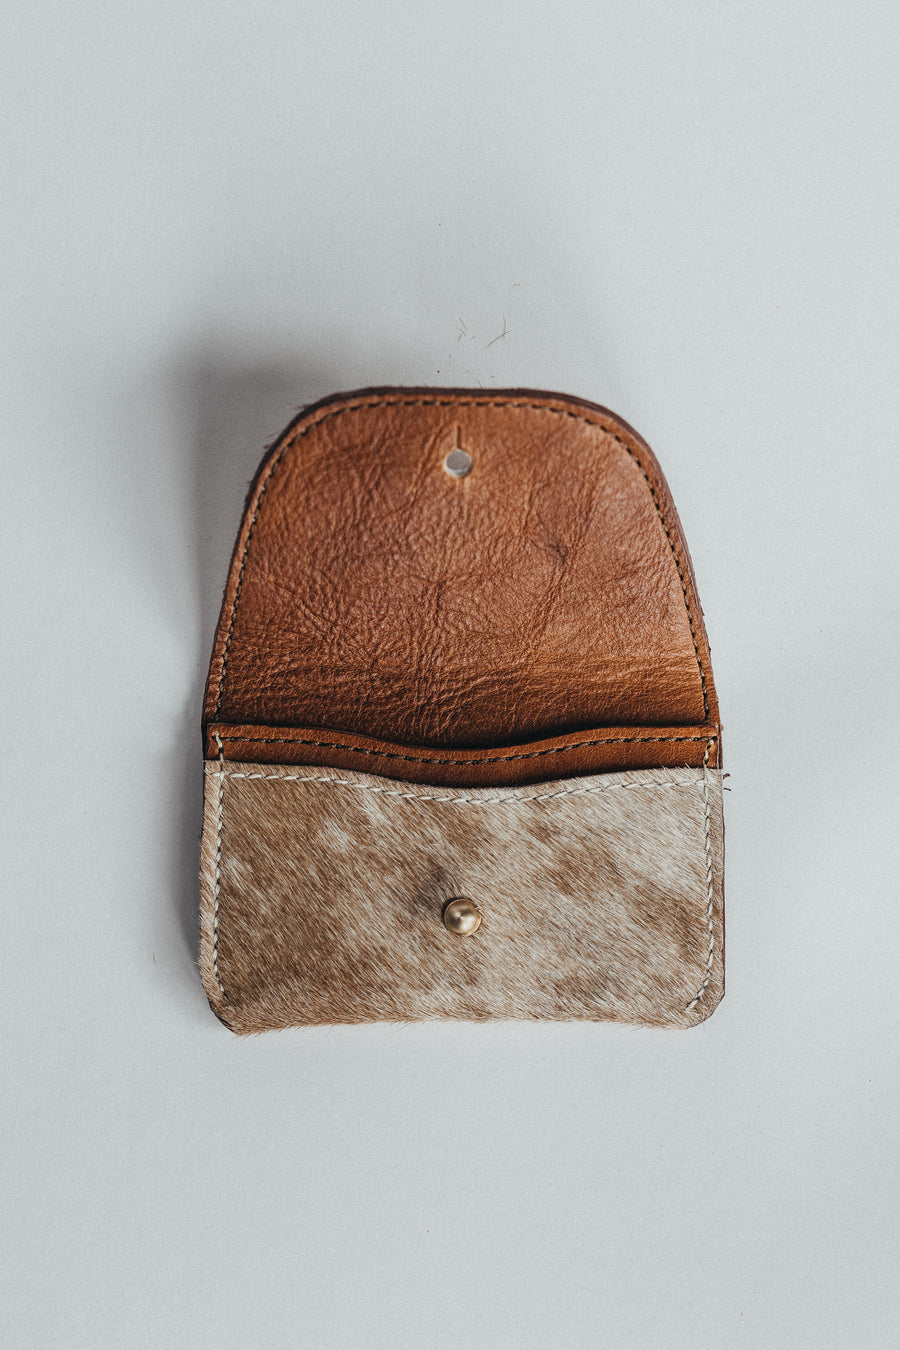 Leather Card Wallet || Indigo Laine & Co.